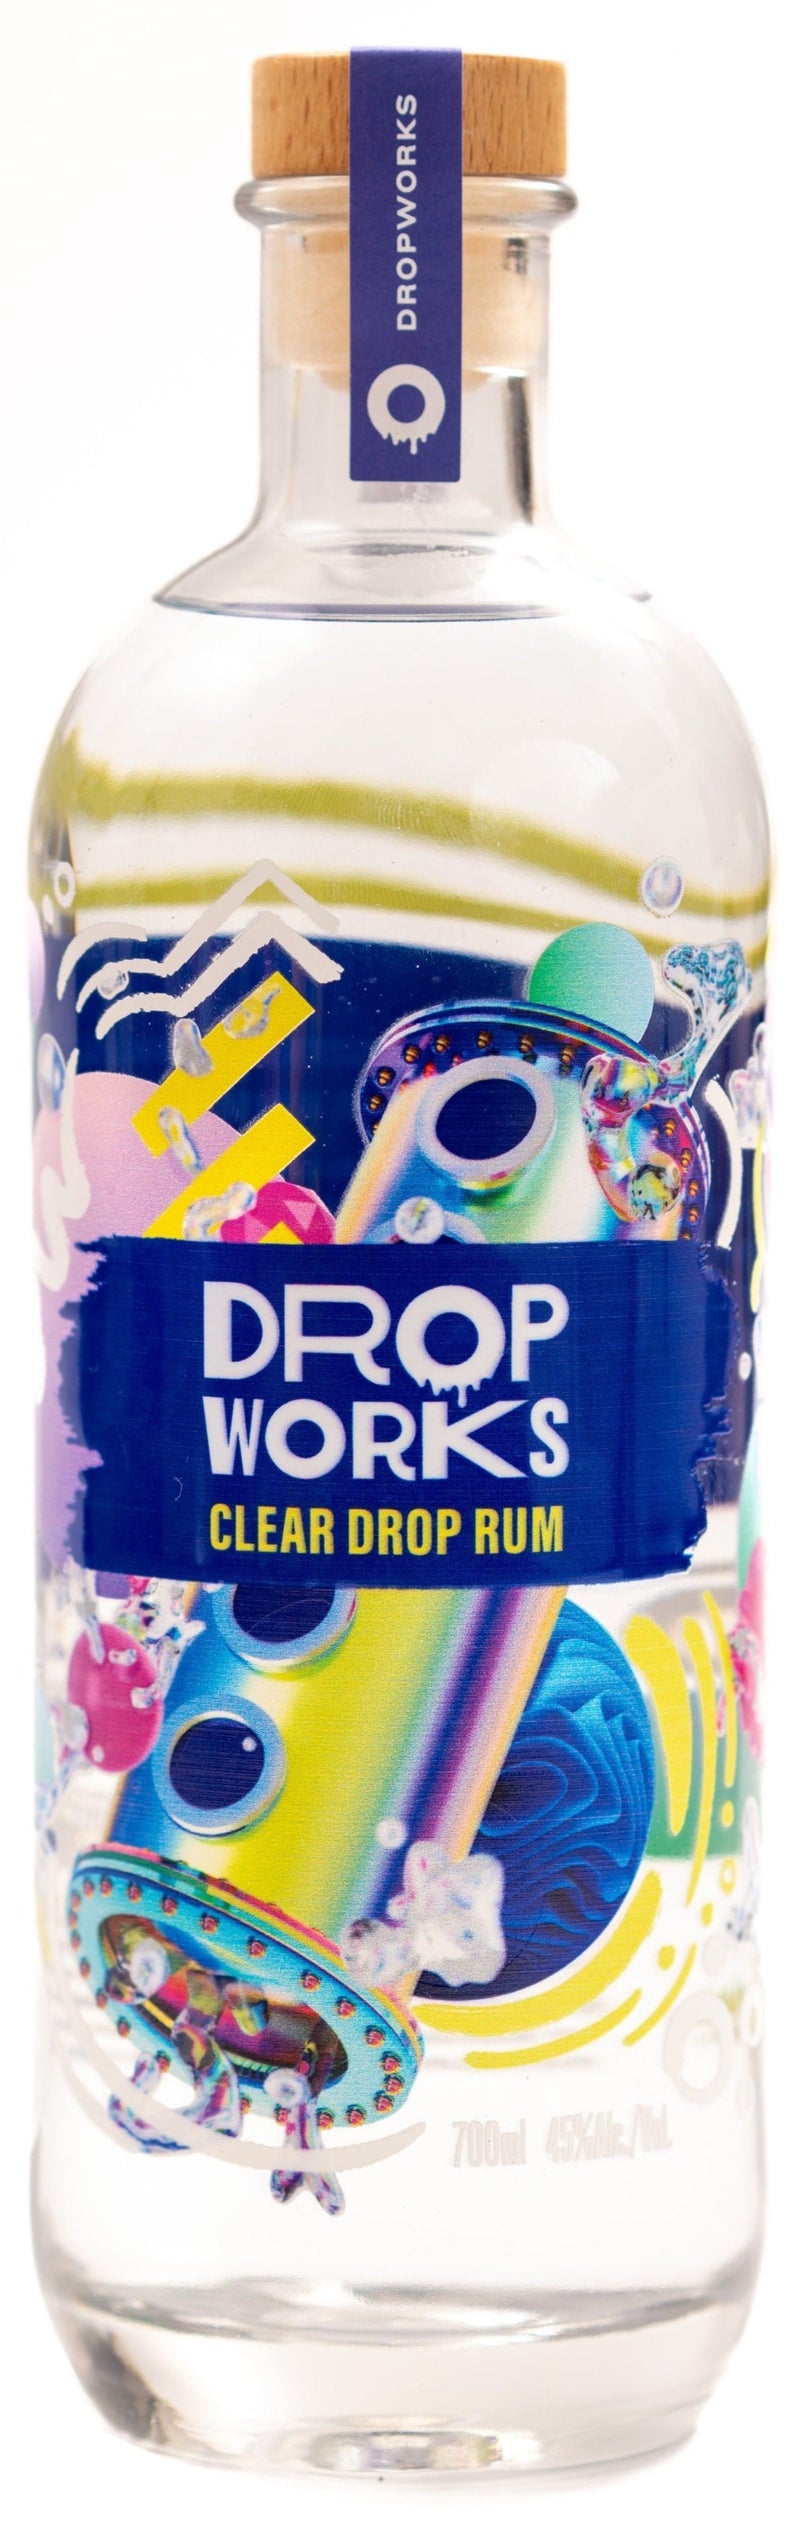 Dropworks Clear Drop Rum 70cl